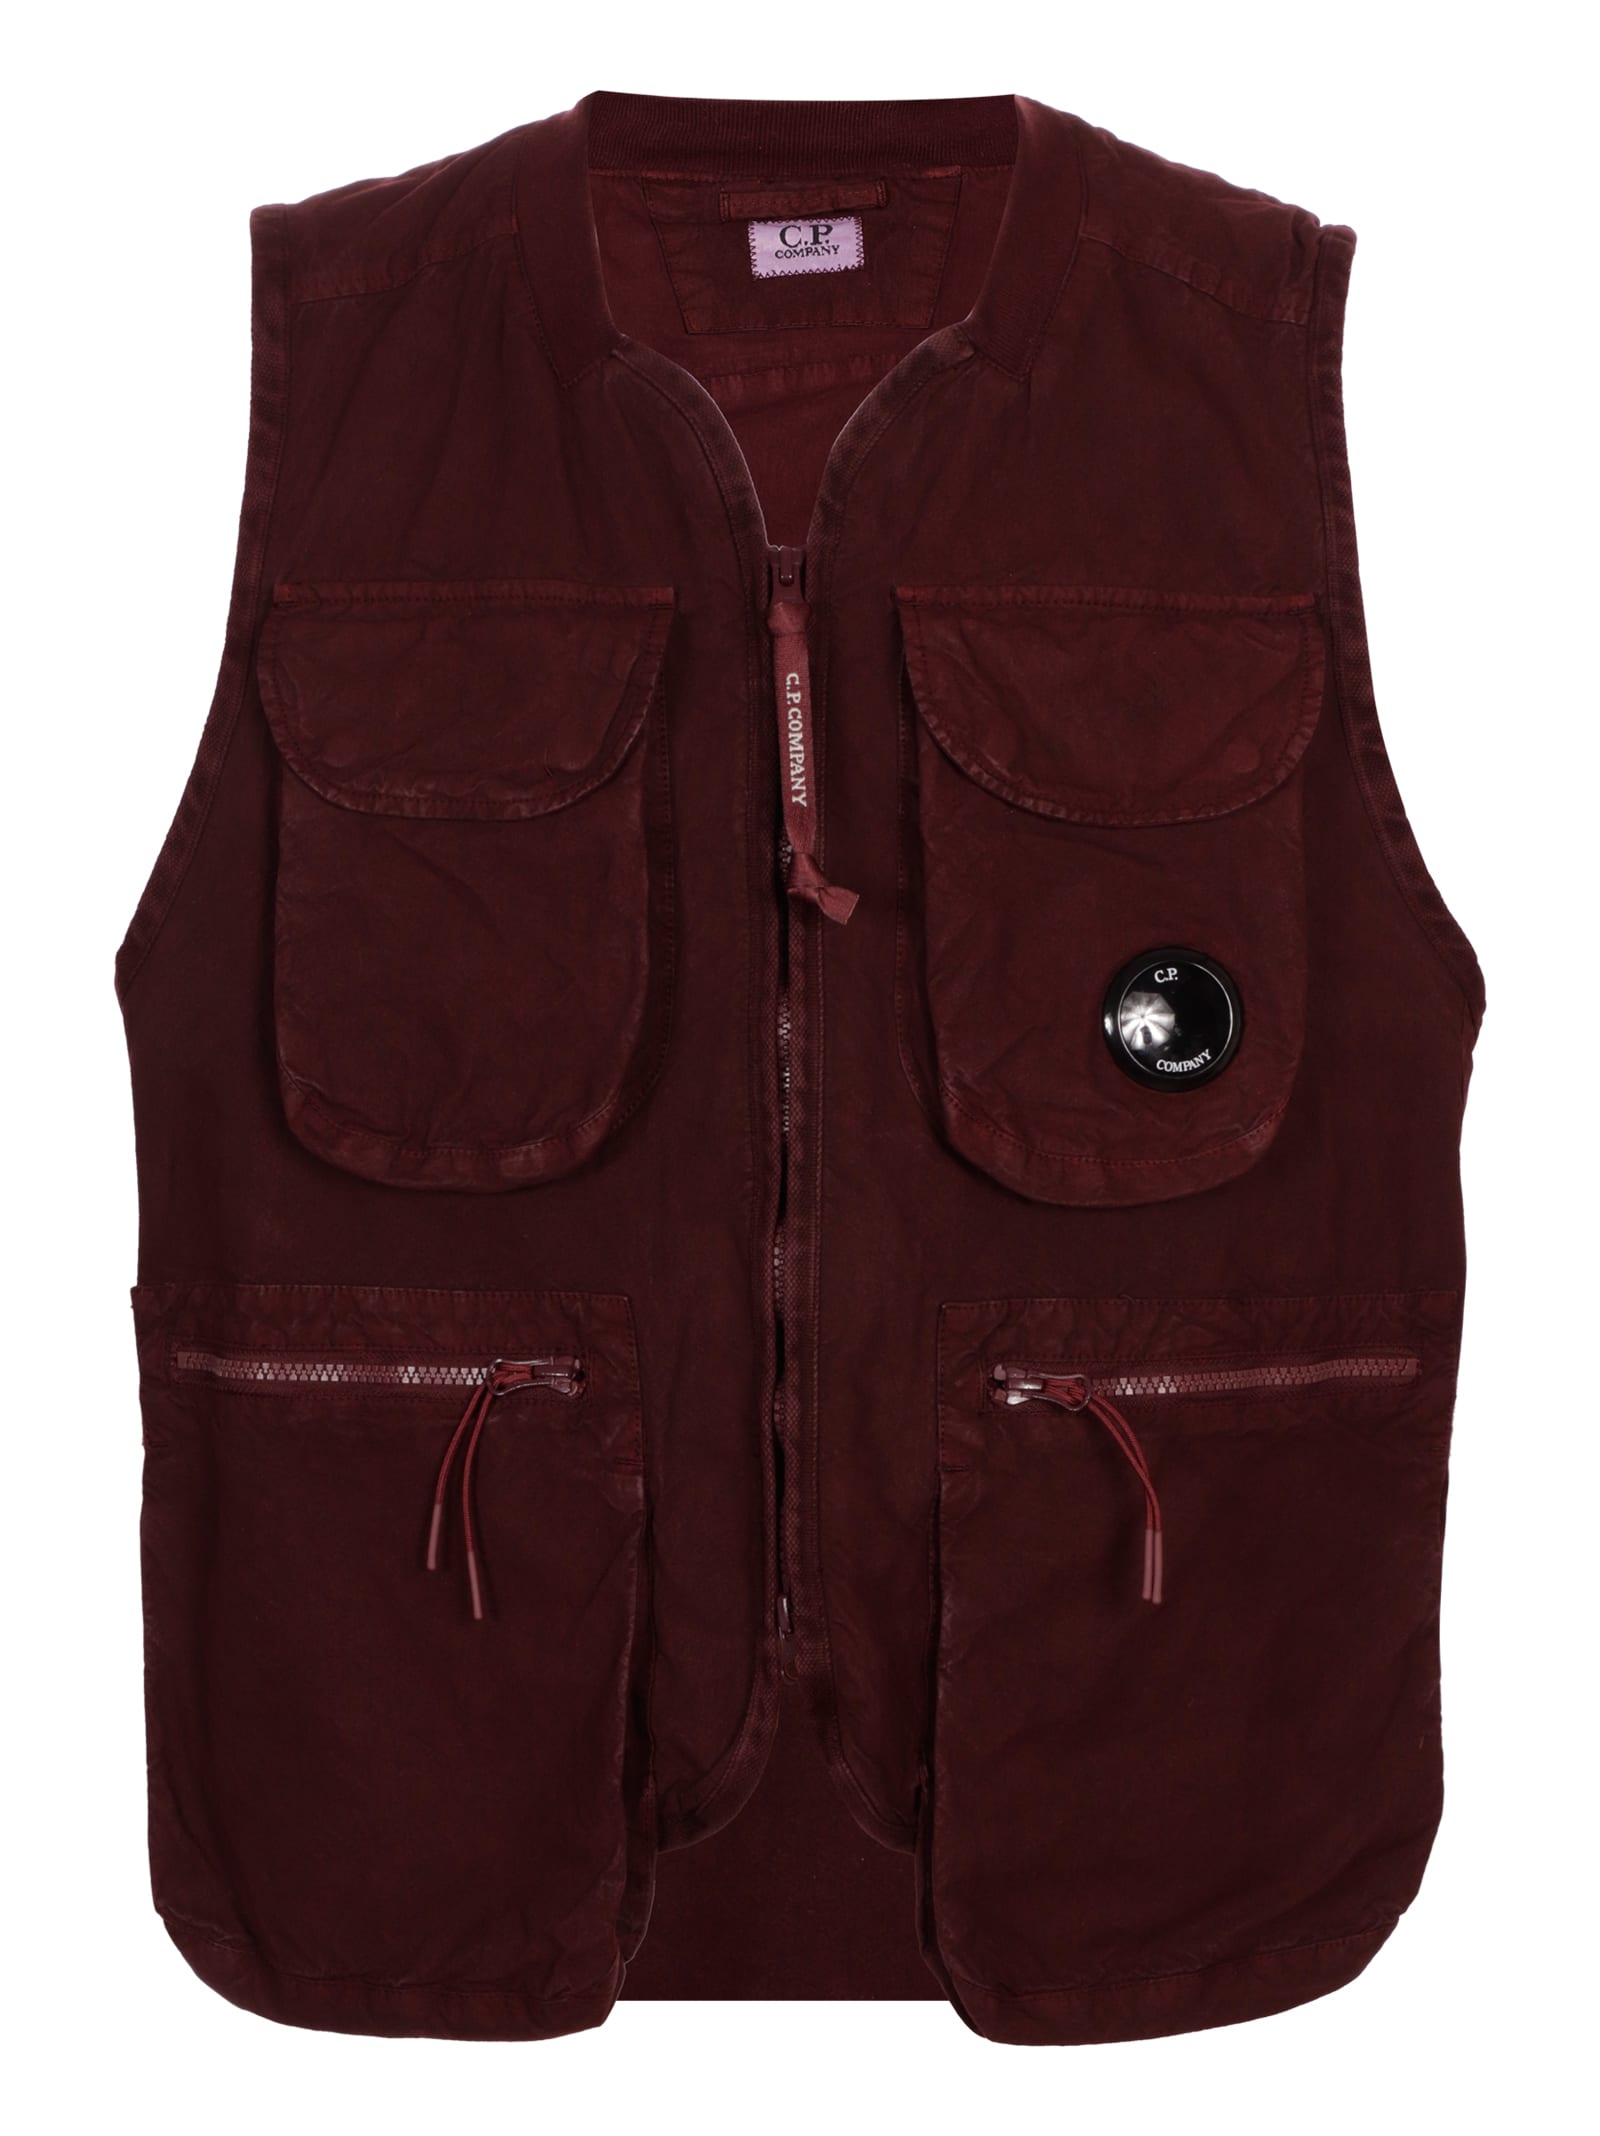 C.P. Company Outerwear Vest In Ba-tic